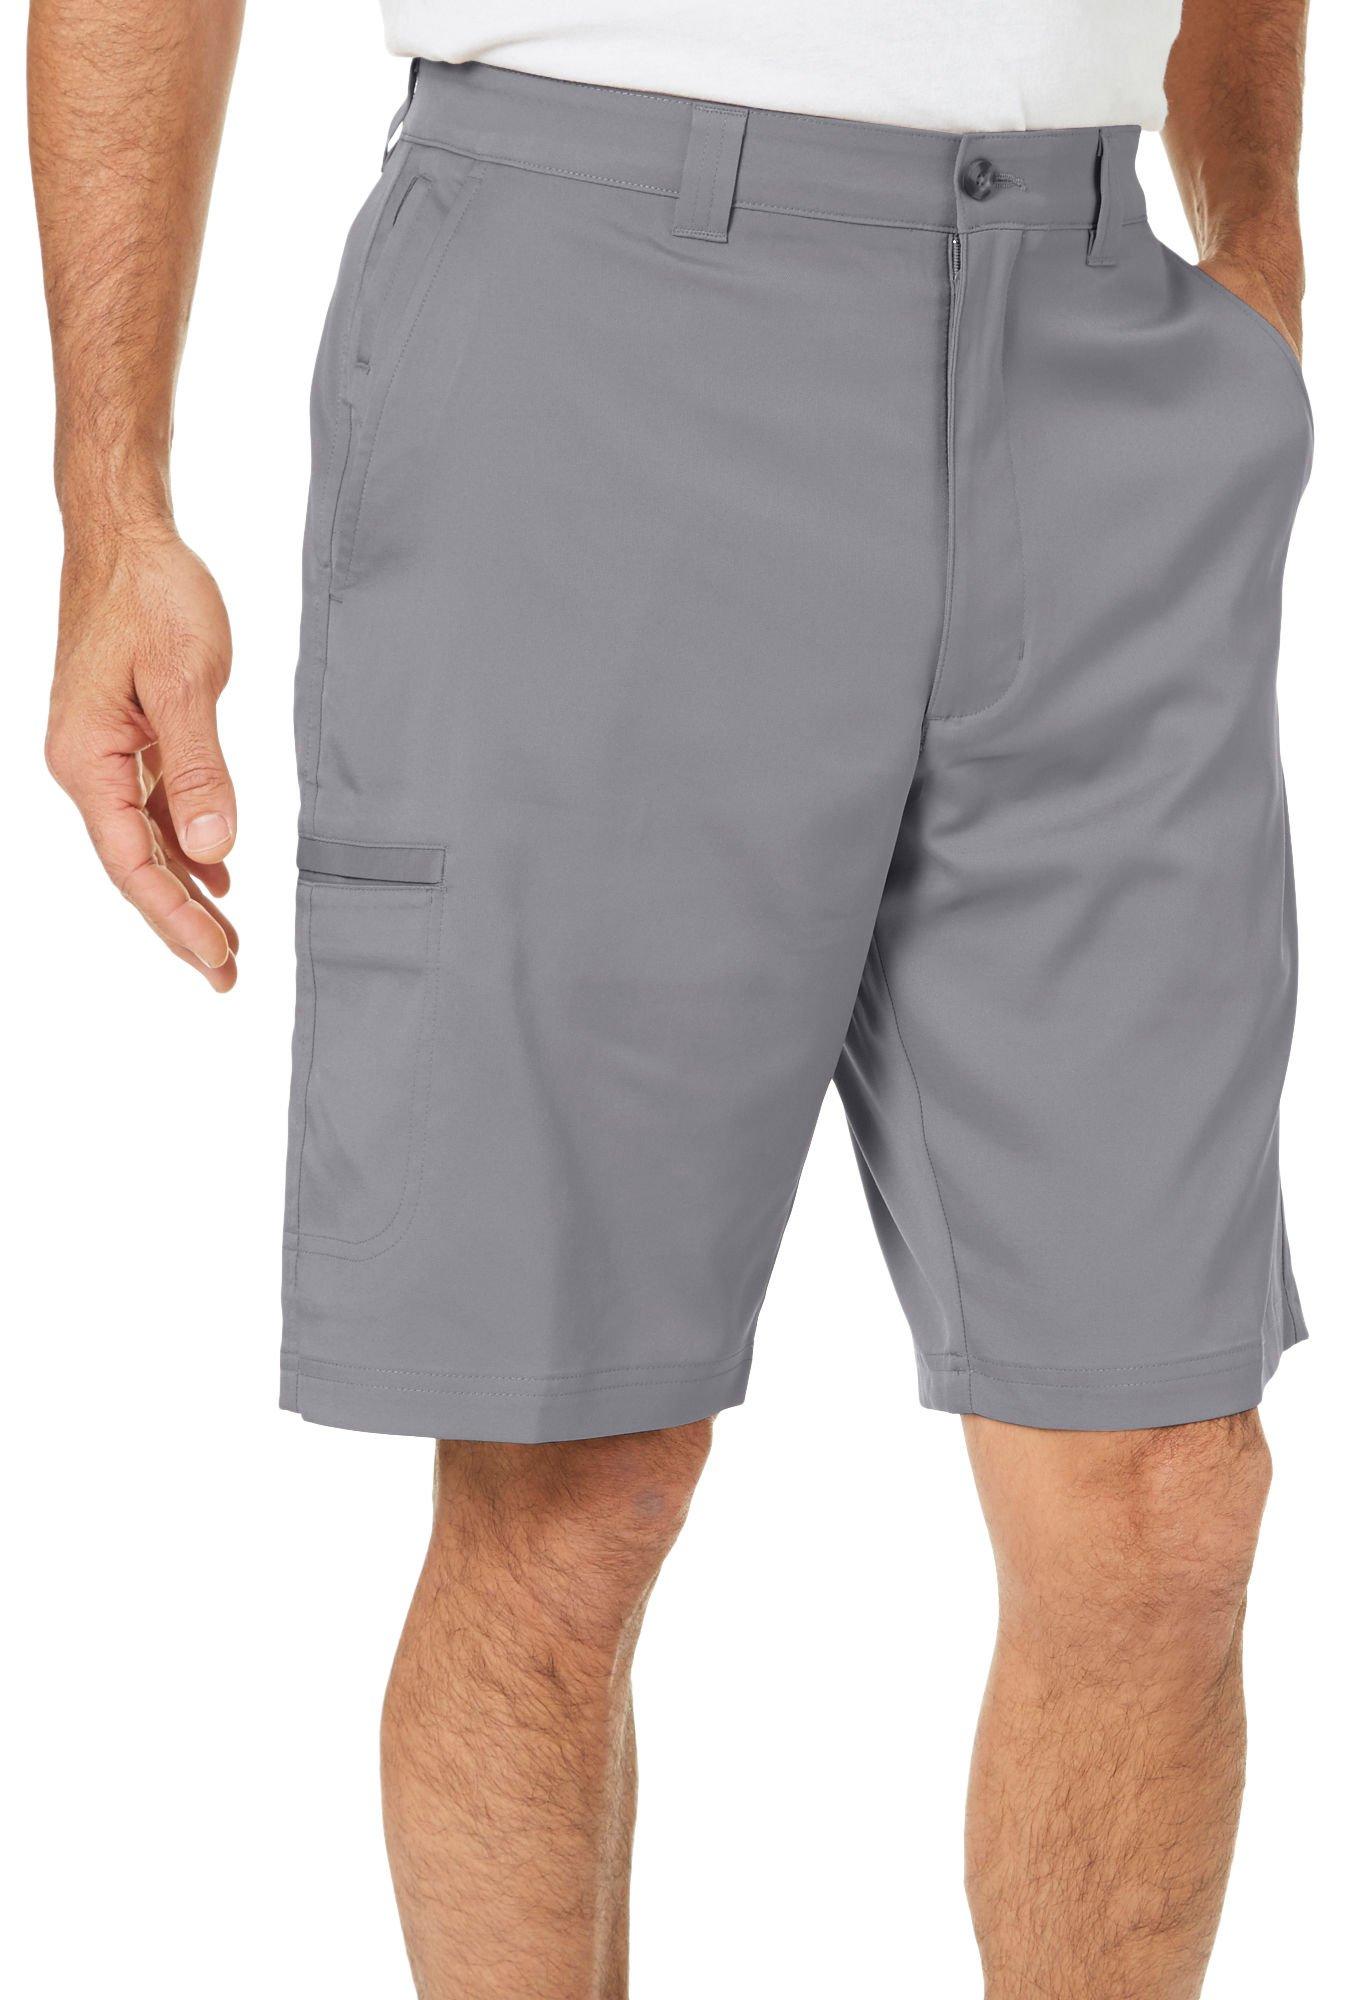 nike men's cargo golf shorts